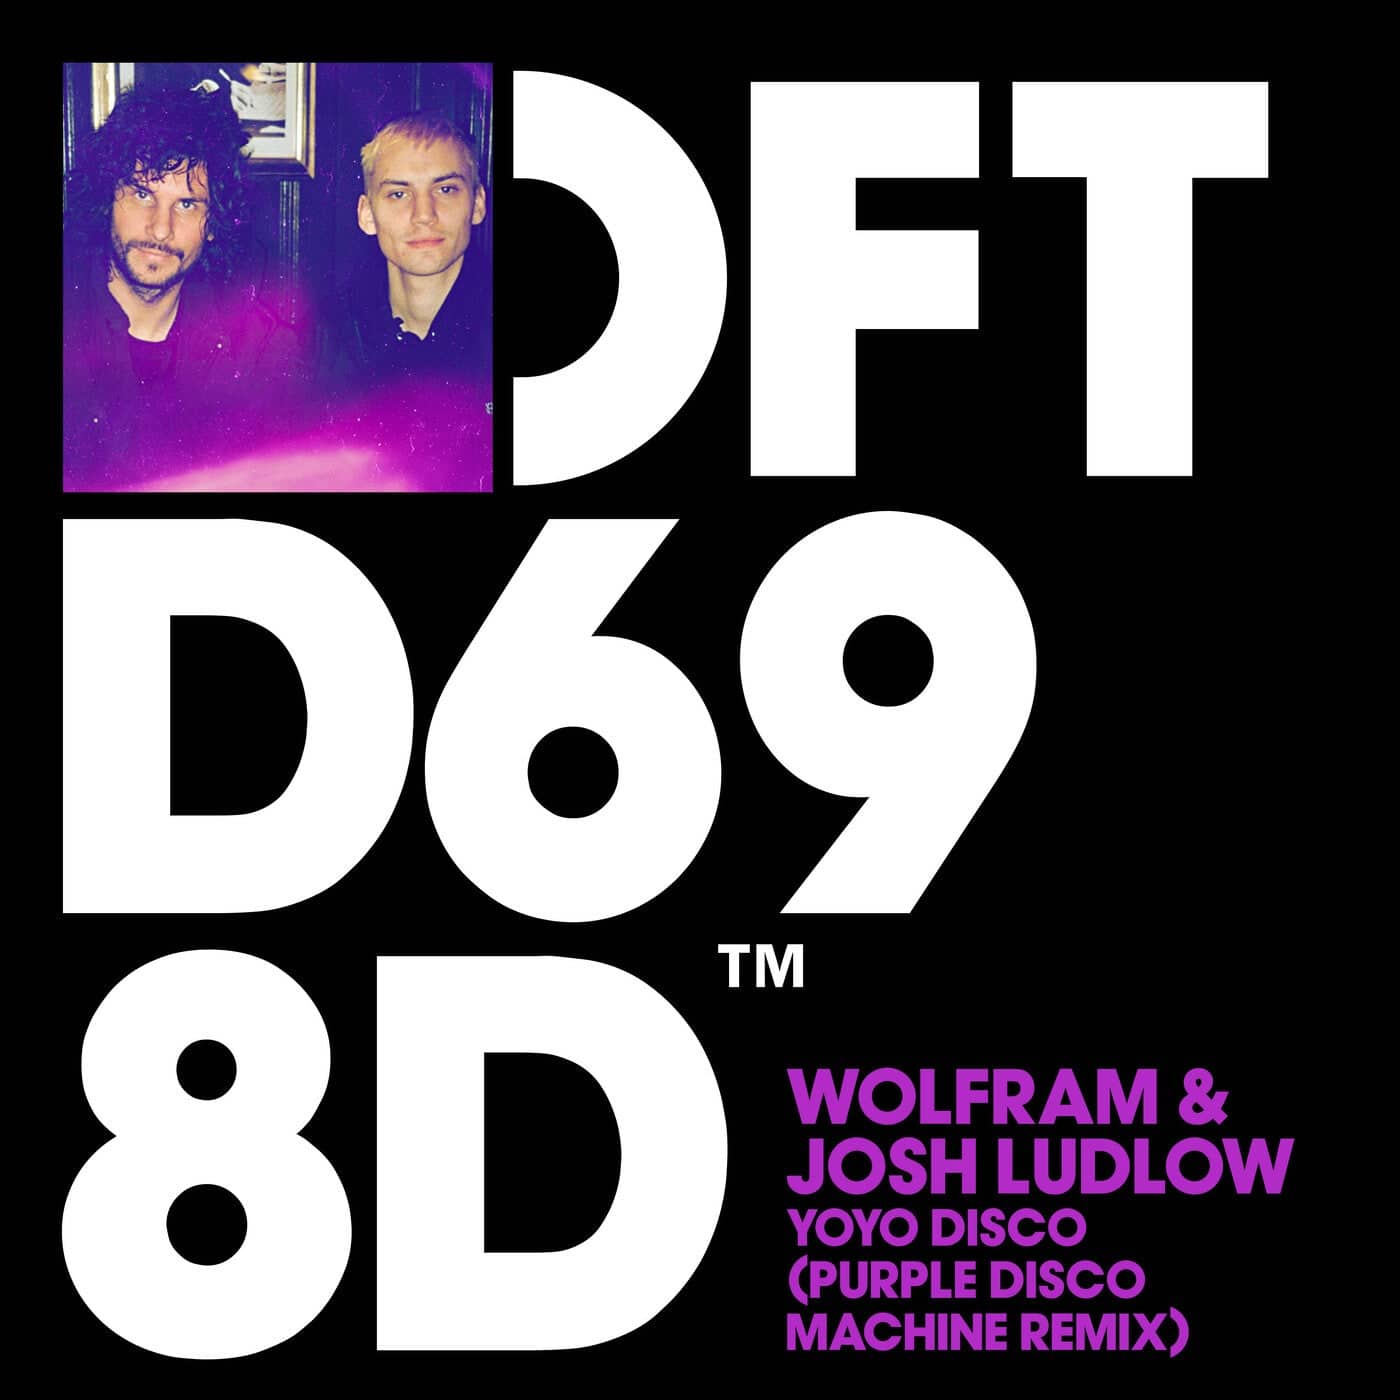 image cover: Wolfram, Josh Ludlow - YoYo Disco - Purple Disco Machine Extended Remix on Defected